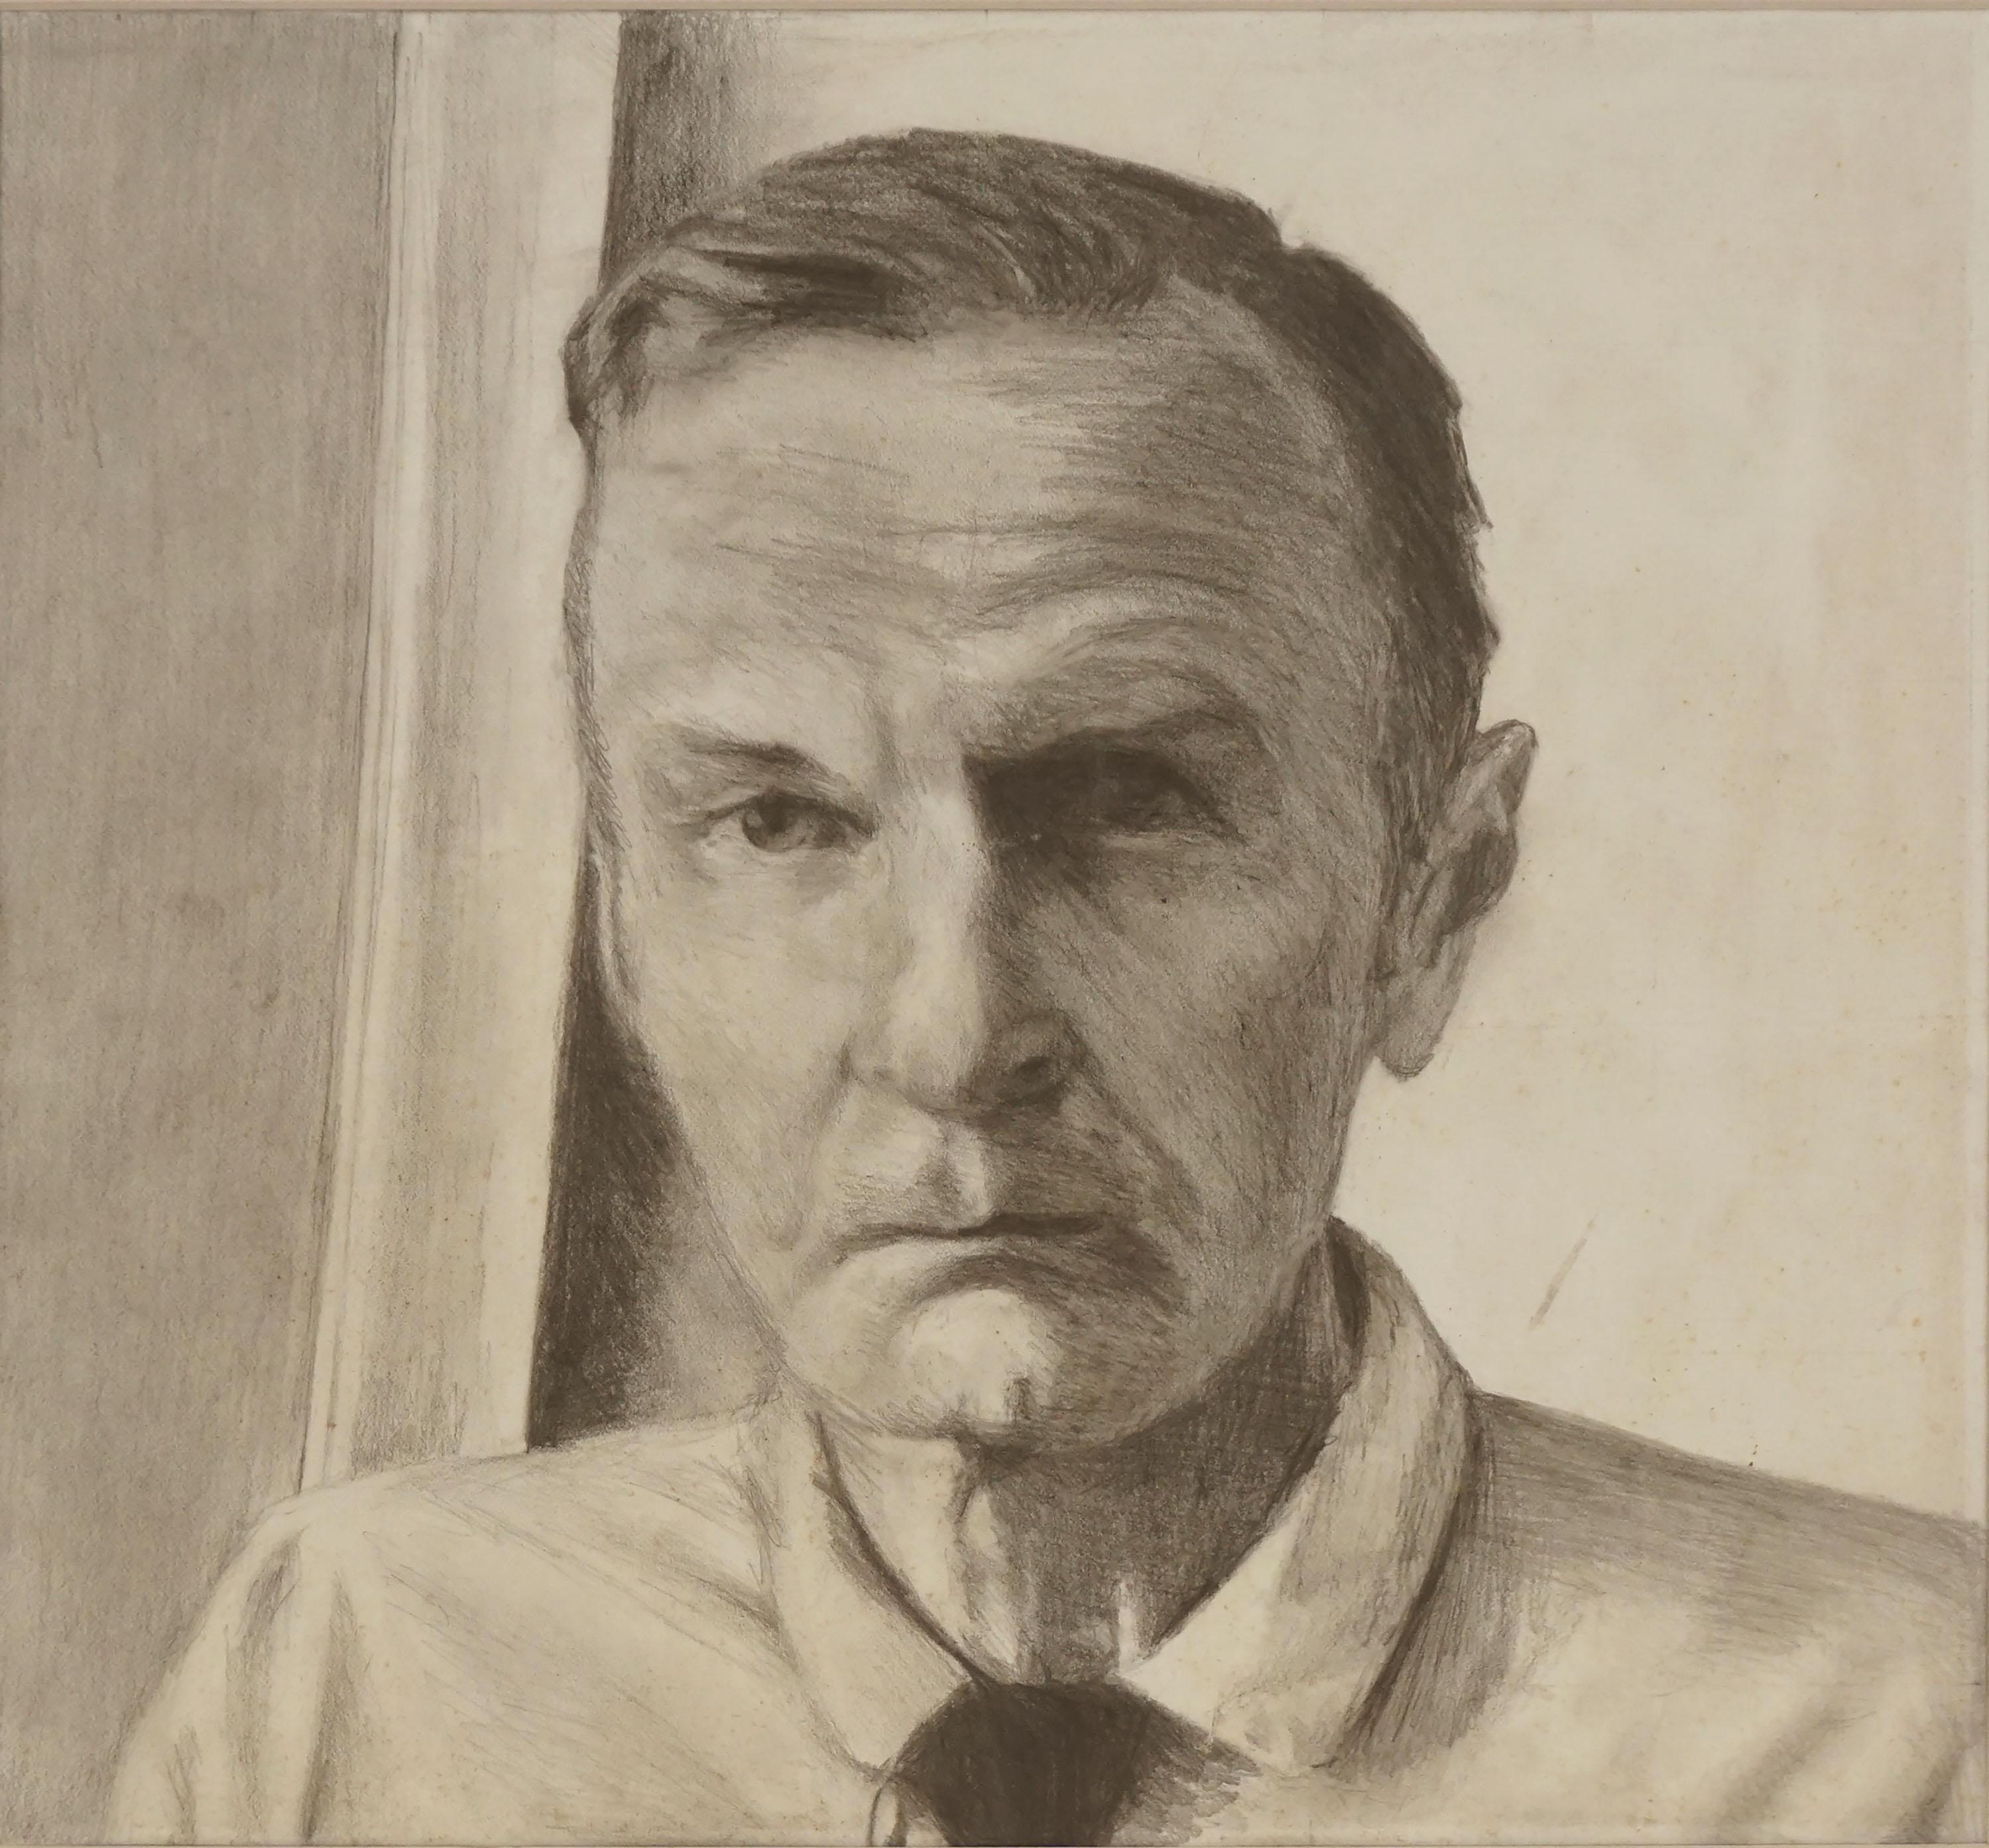 Unknown Portrait Painting - Original Portrait of Noir Crime Writer Cornell Woolrich